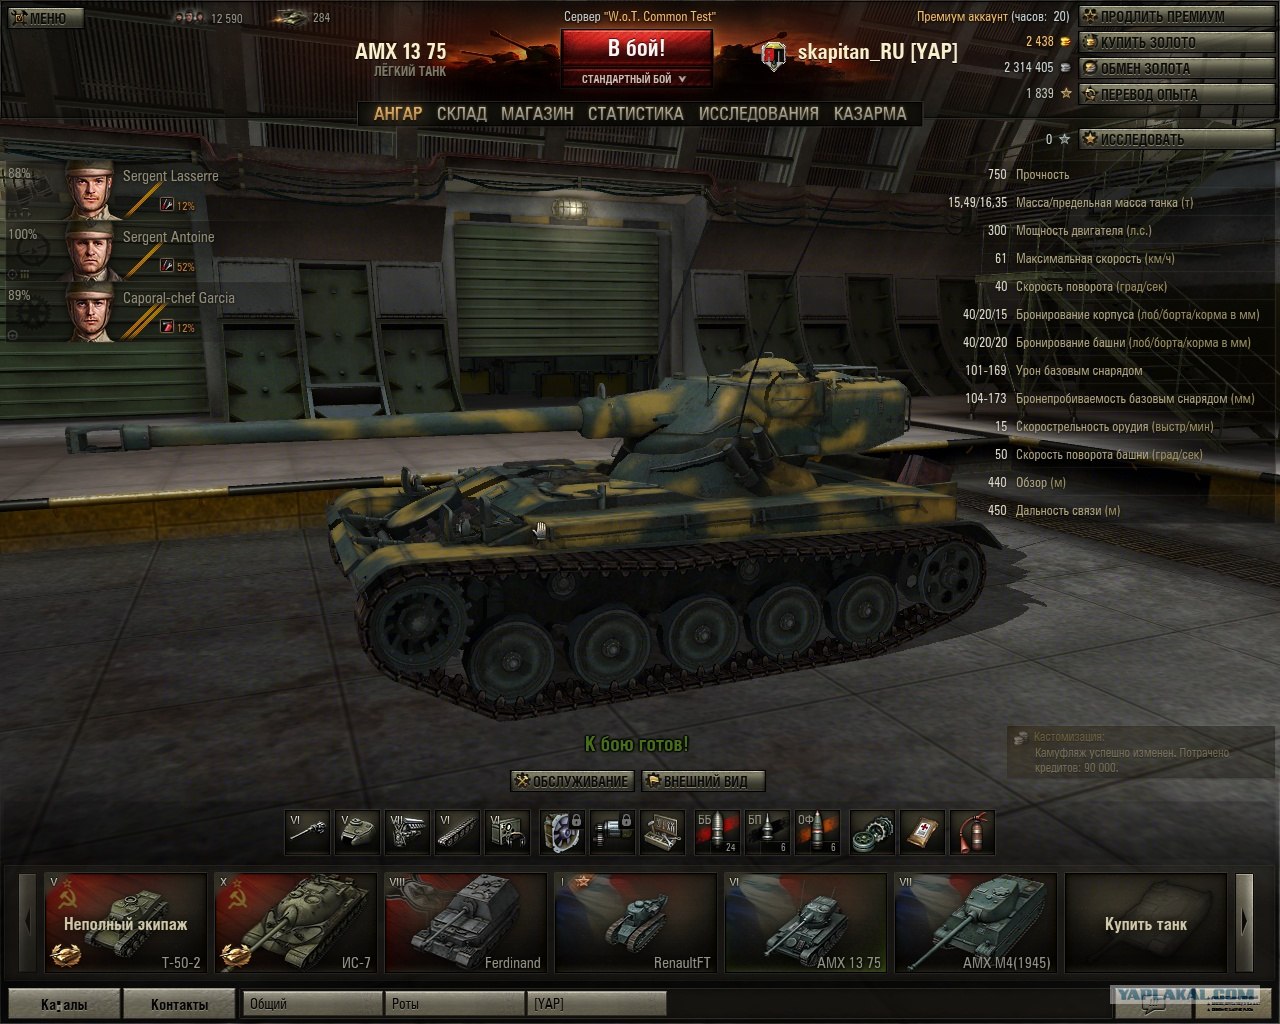 AMX скорострельность. Sherman sa50. 75mm sa50. Т-50 скорость поворота башни. Купить танк 300 в туле